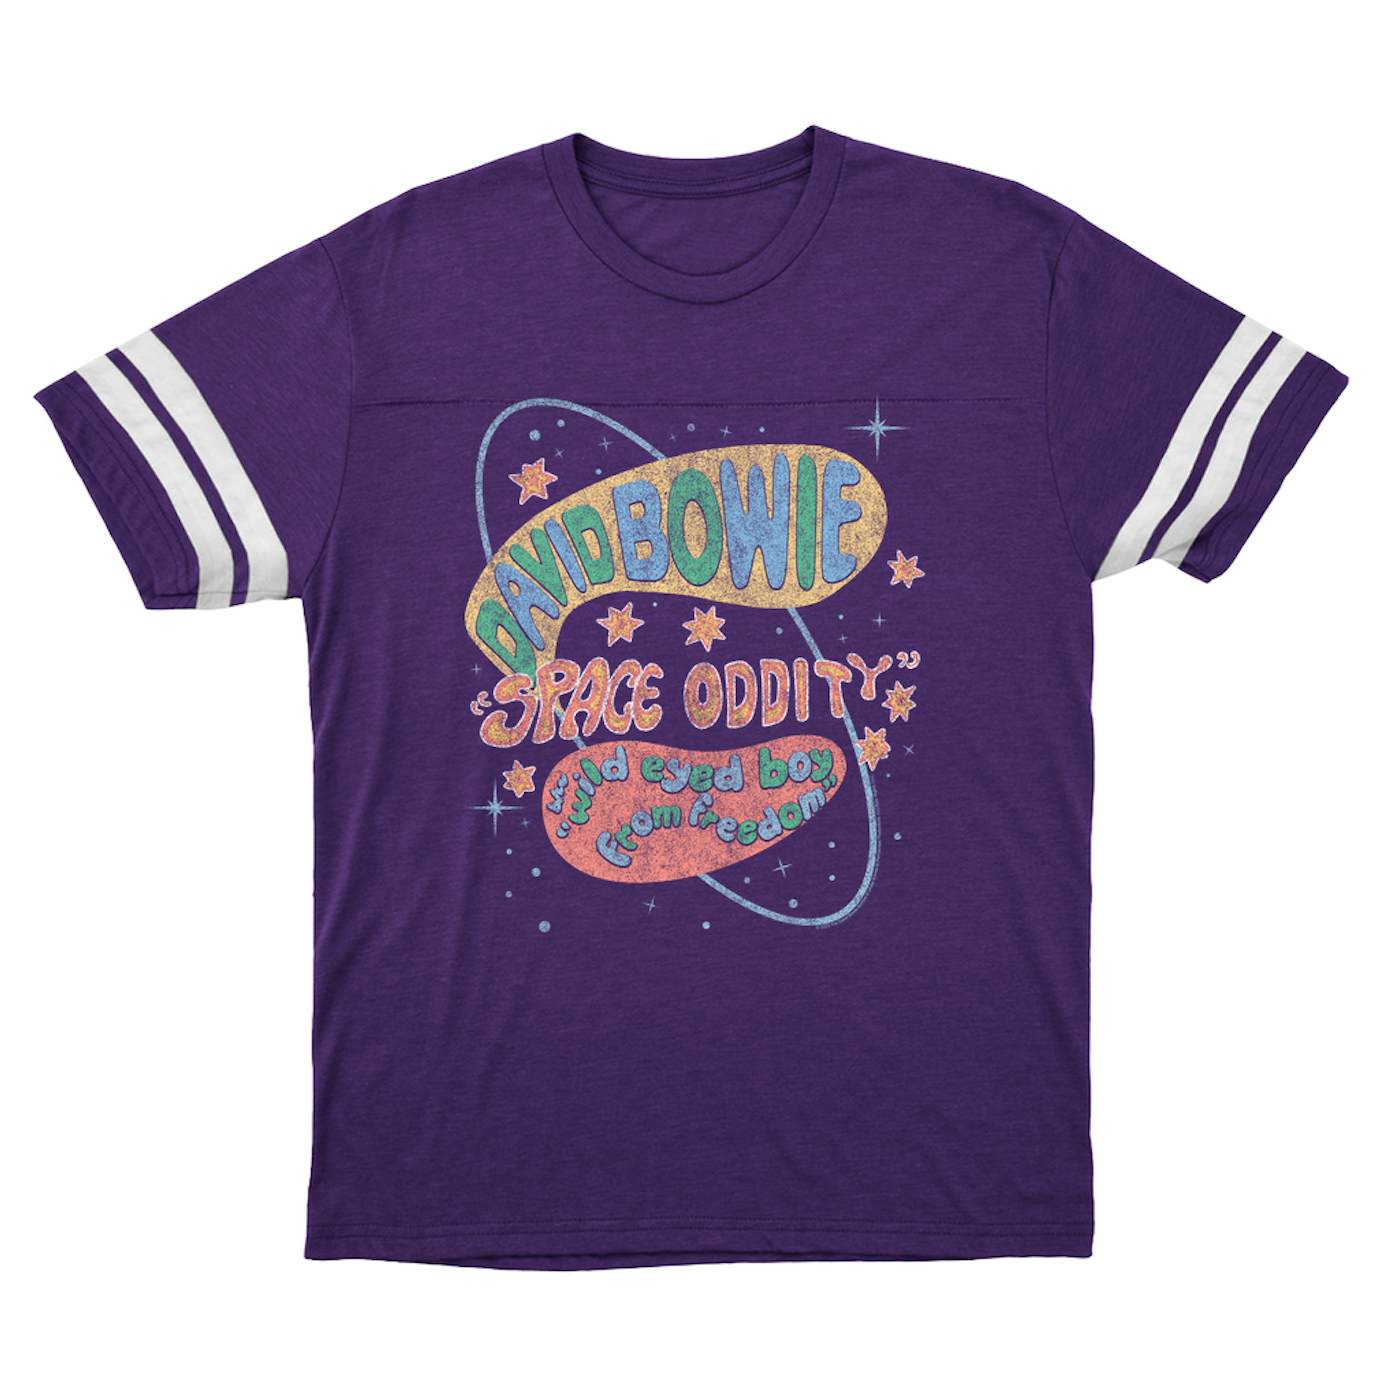 David Bowie T-Shirt | Pastel Space Oddity Distressed David Bowie Football Shirt